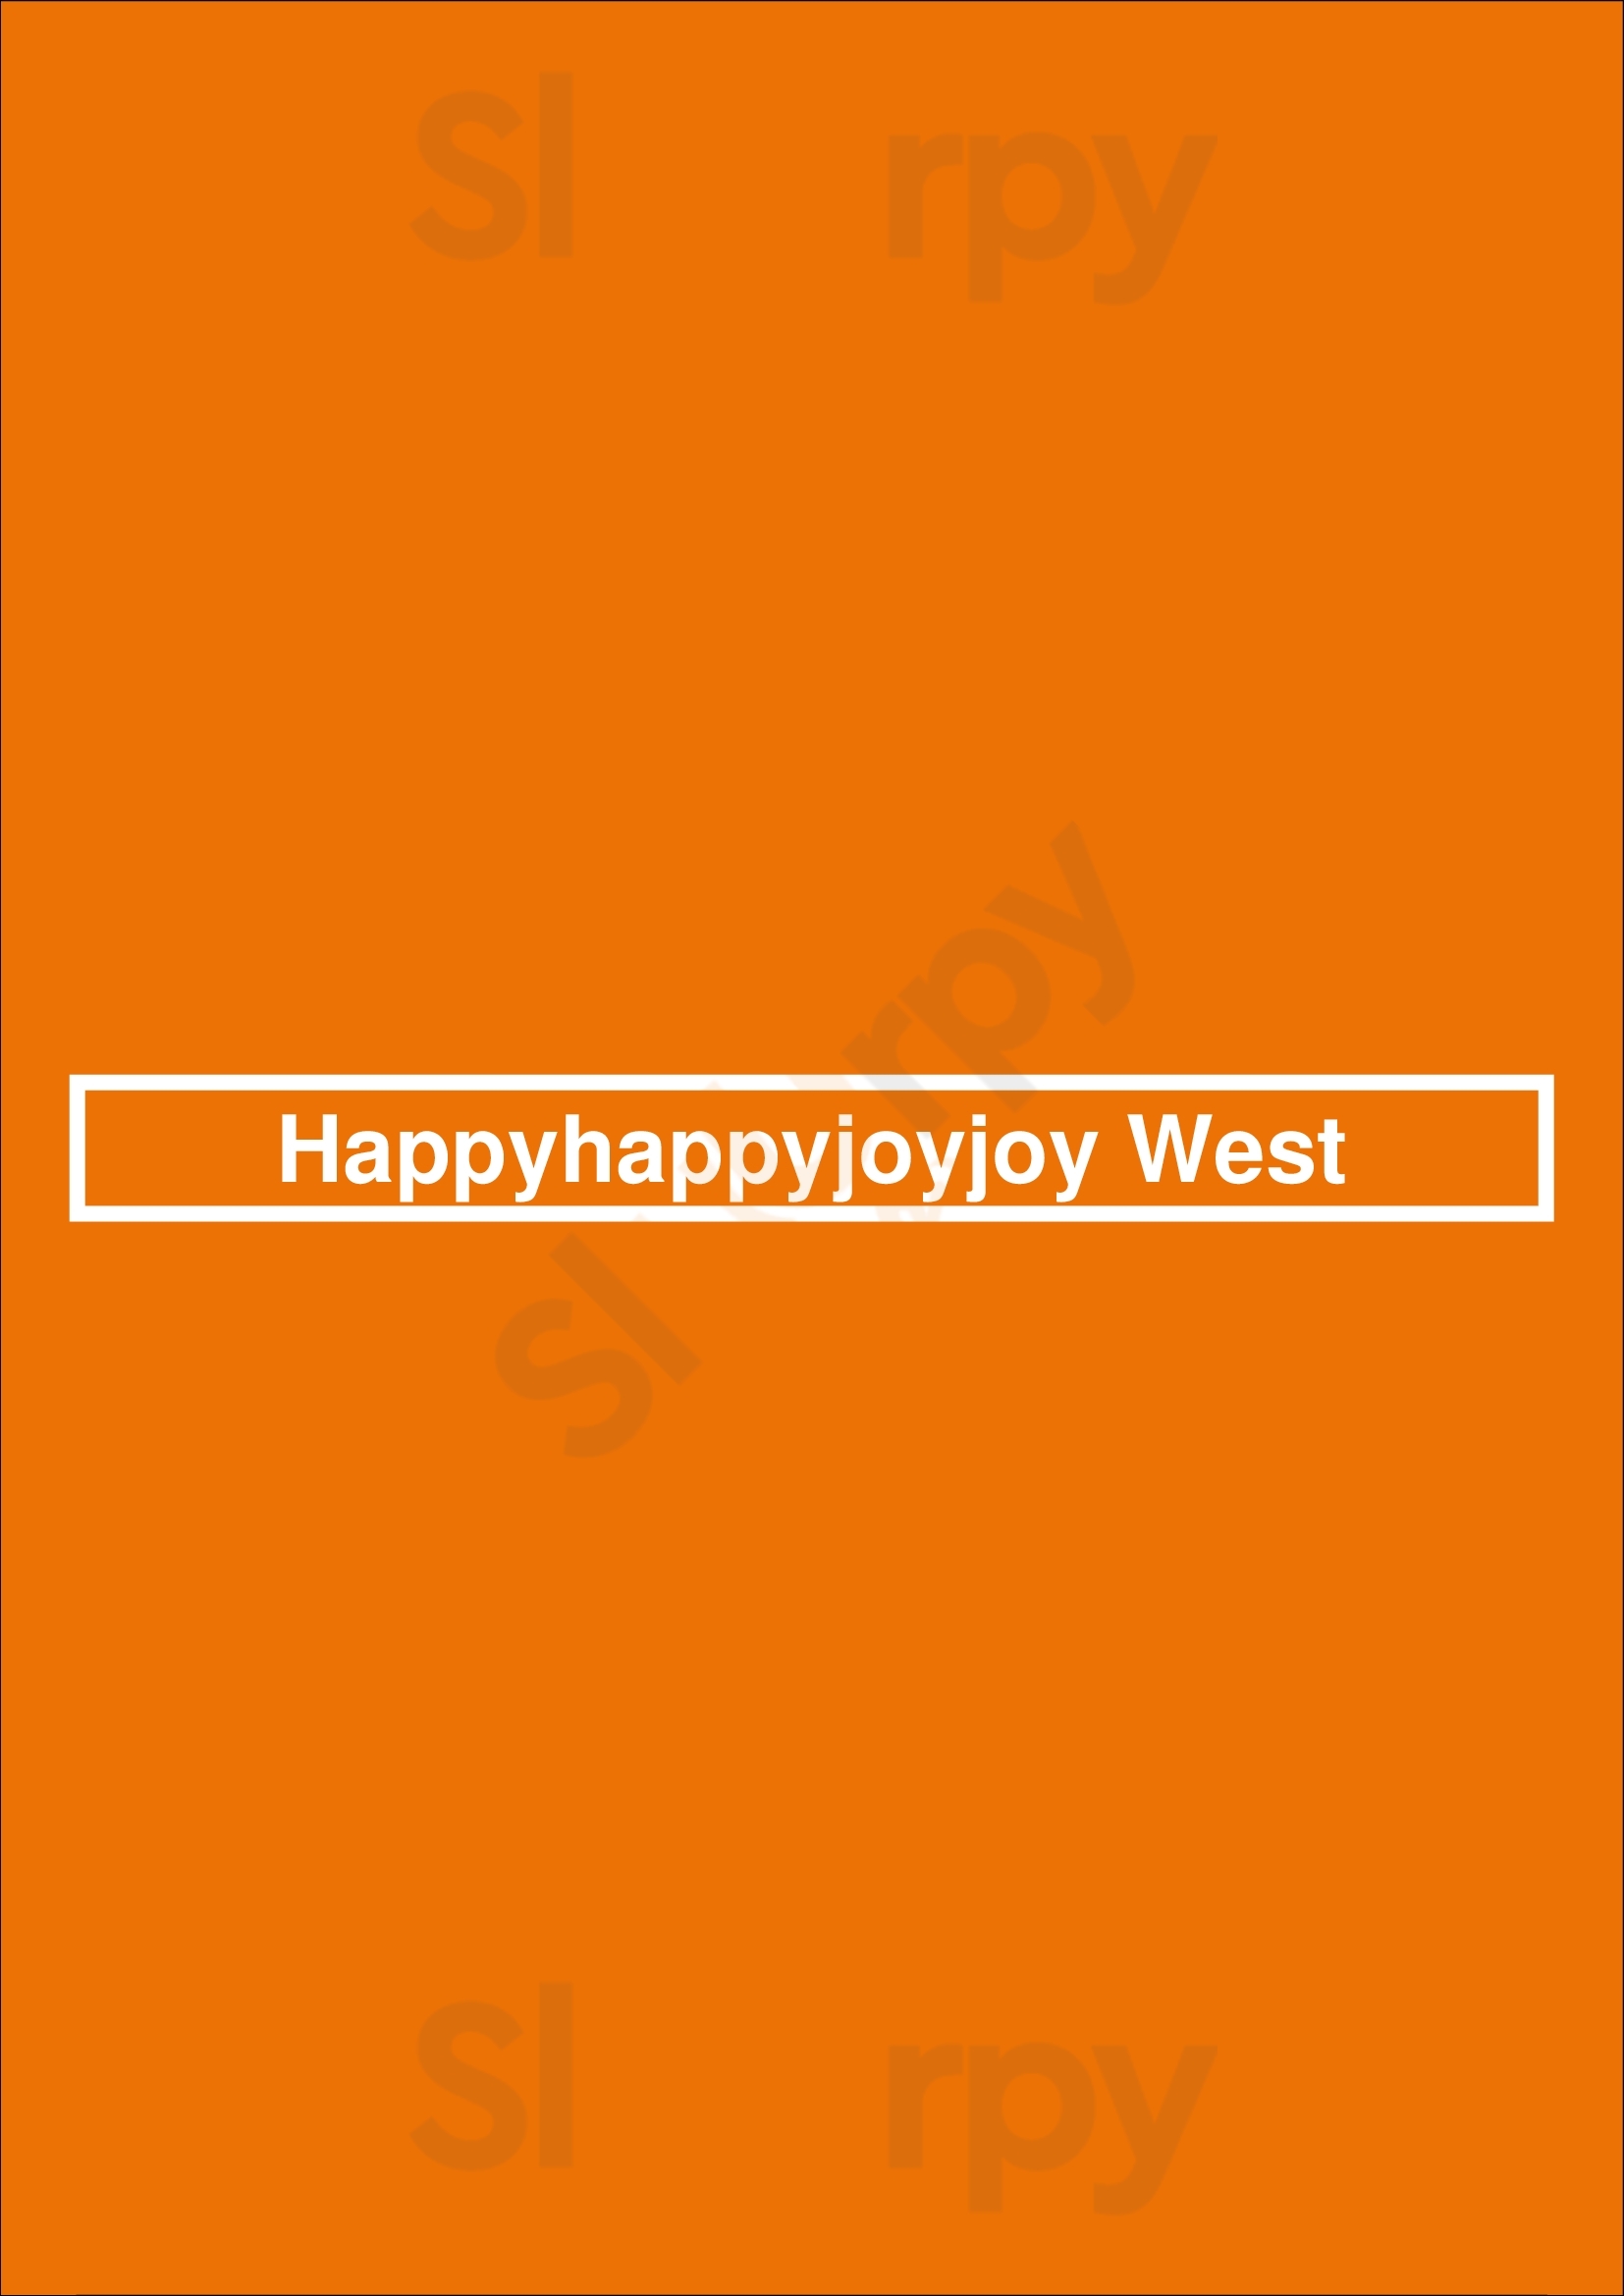 Happyhappyjoyjoy West Amsterdam Menu - 1